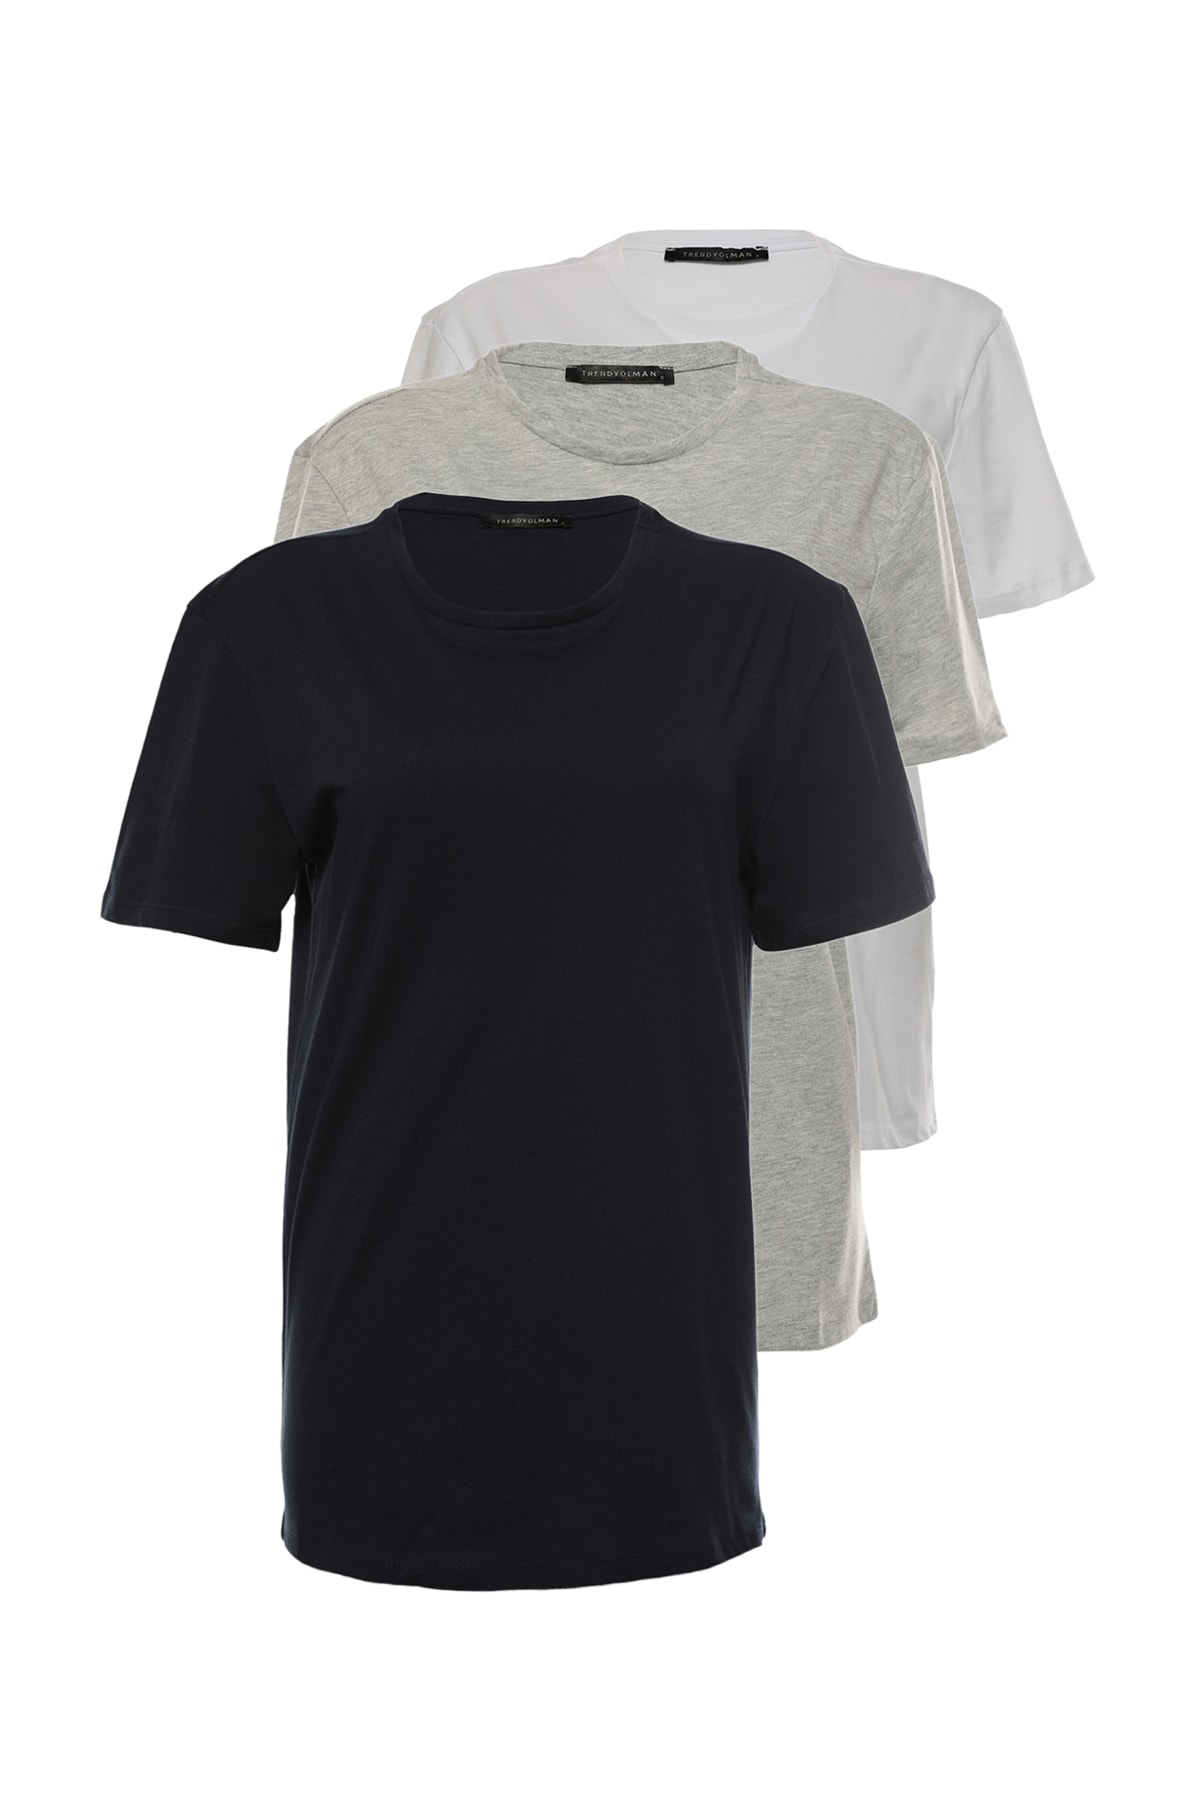 Trendyol Navy Blue-Grey-White Men's Basic Slim/Slim Fit 100% Cotton 3-Pack Crew Neck Short Sleeve T-Shirt